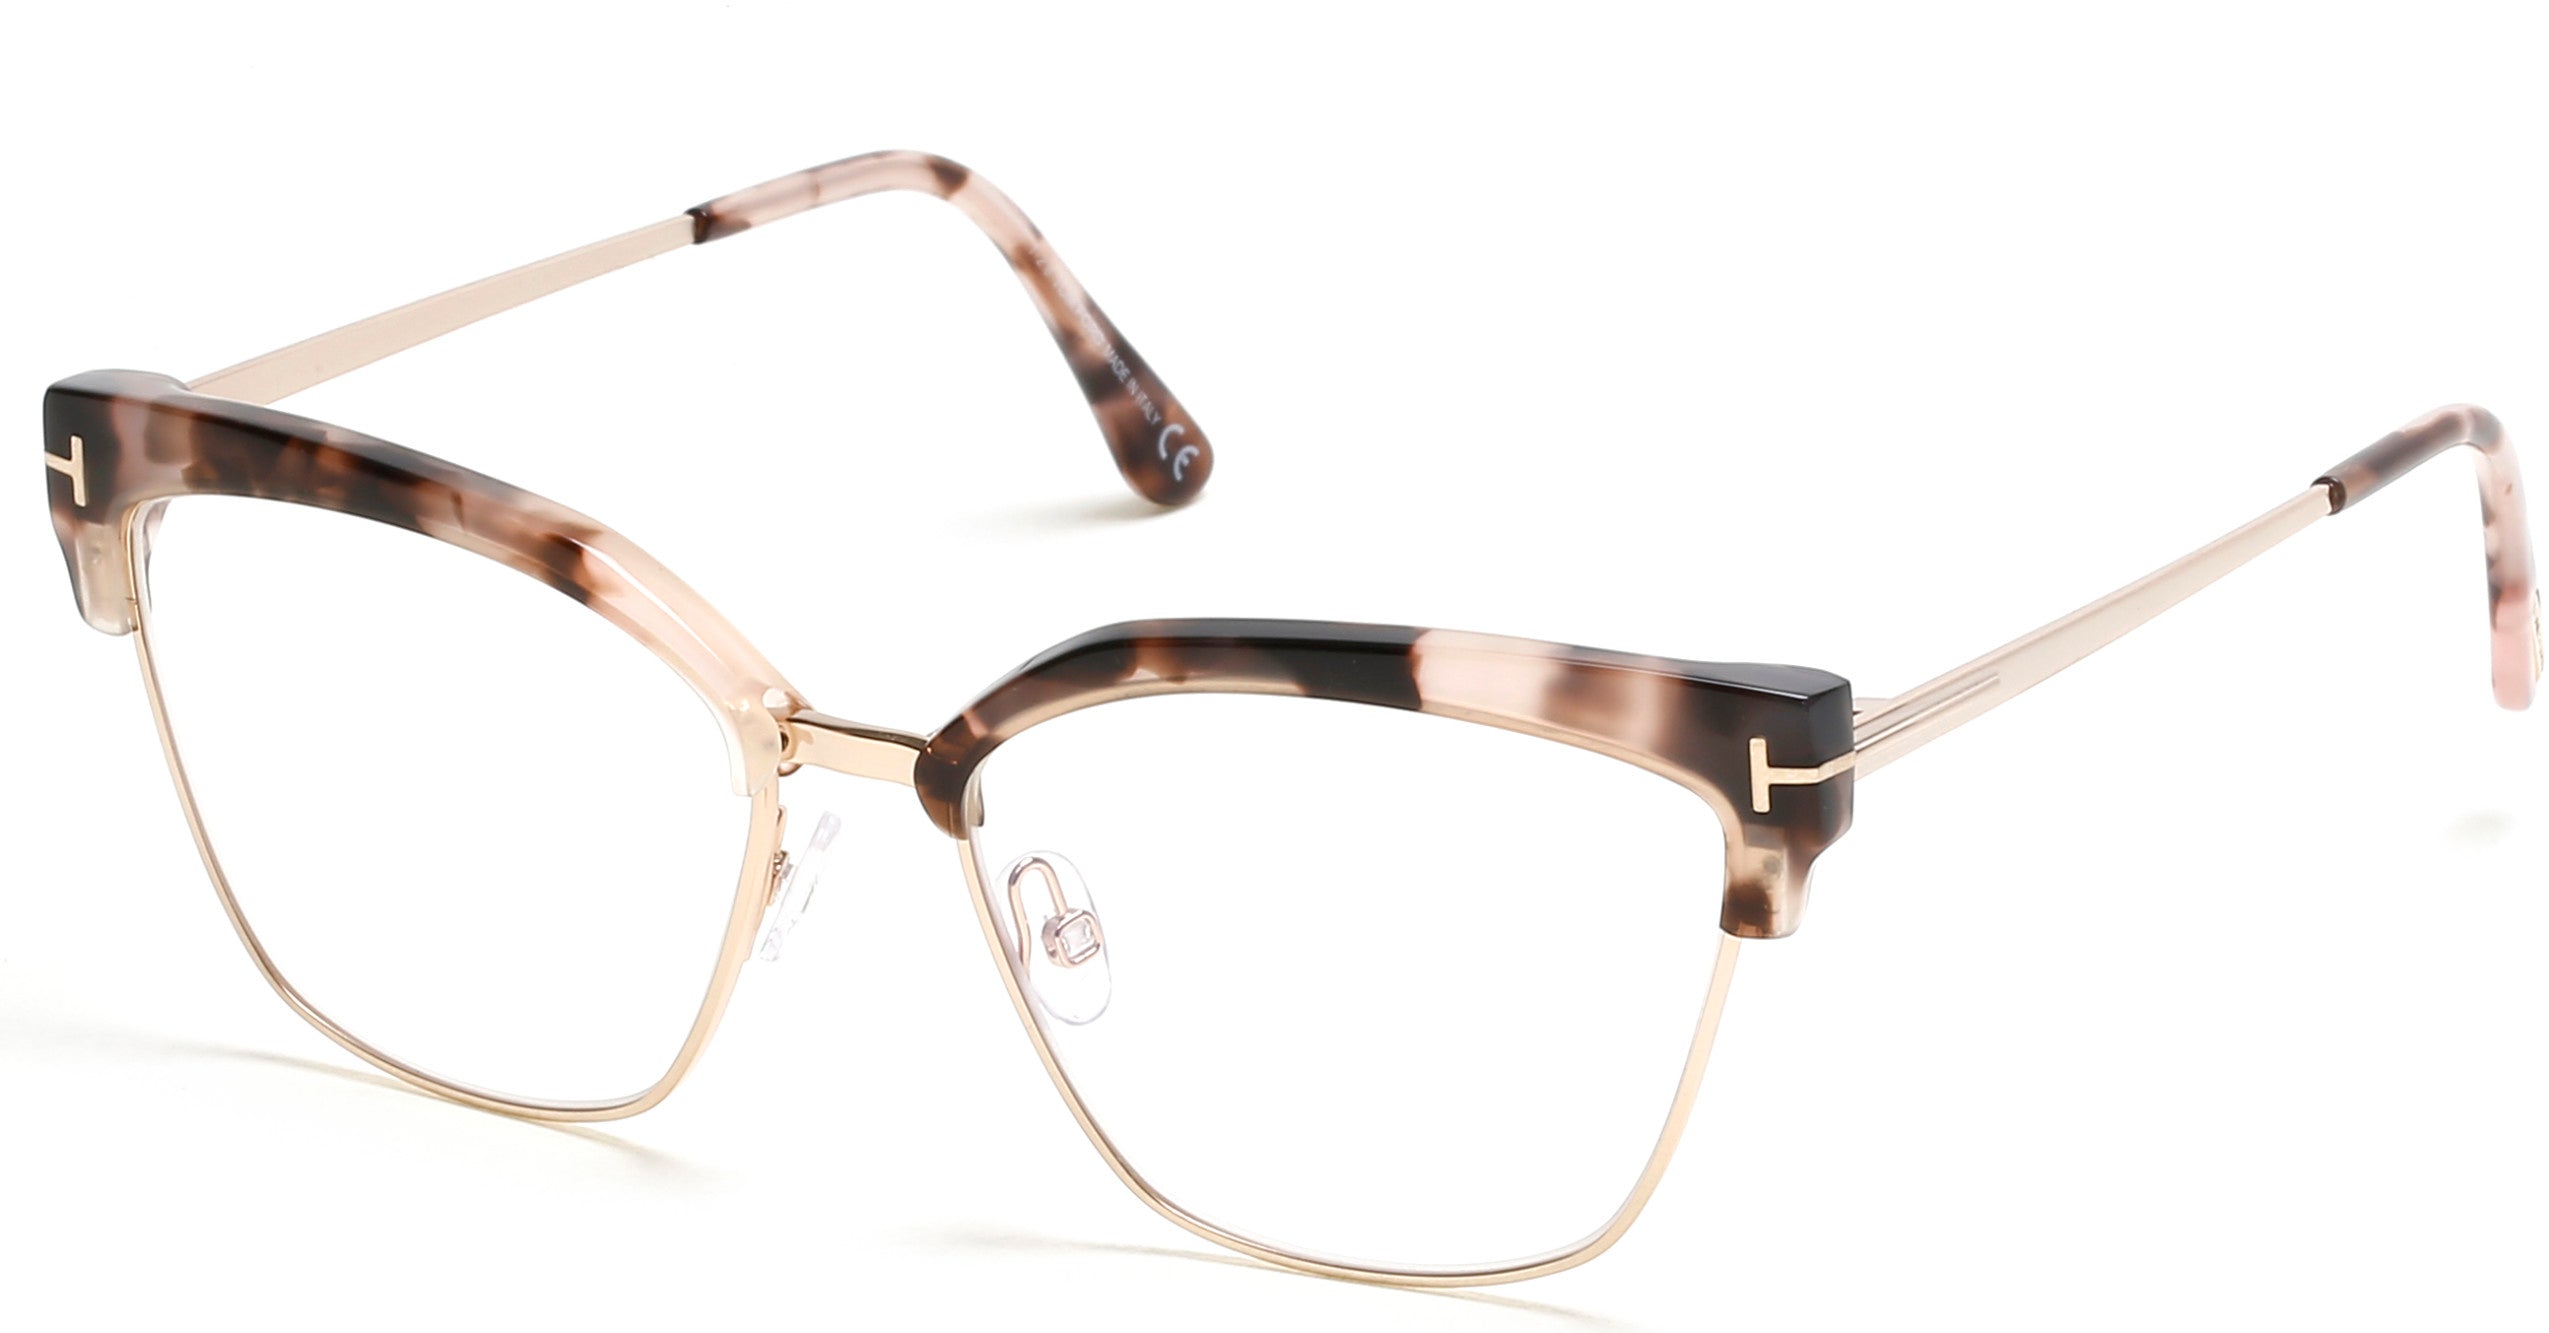 Tom Ford FT5547-B Geometric Eyeglasses 054-054 - Shiny Pink Havana, Shiny Rose Gold / Blue Block Lenses